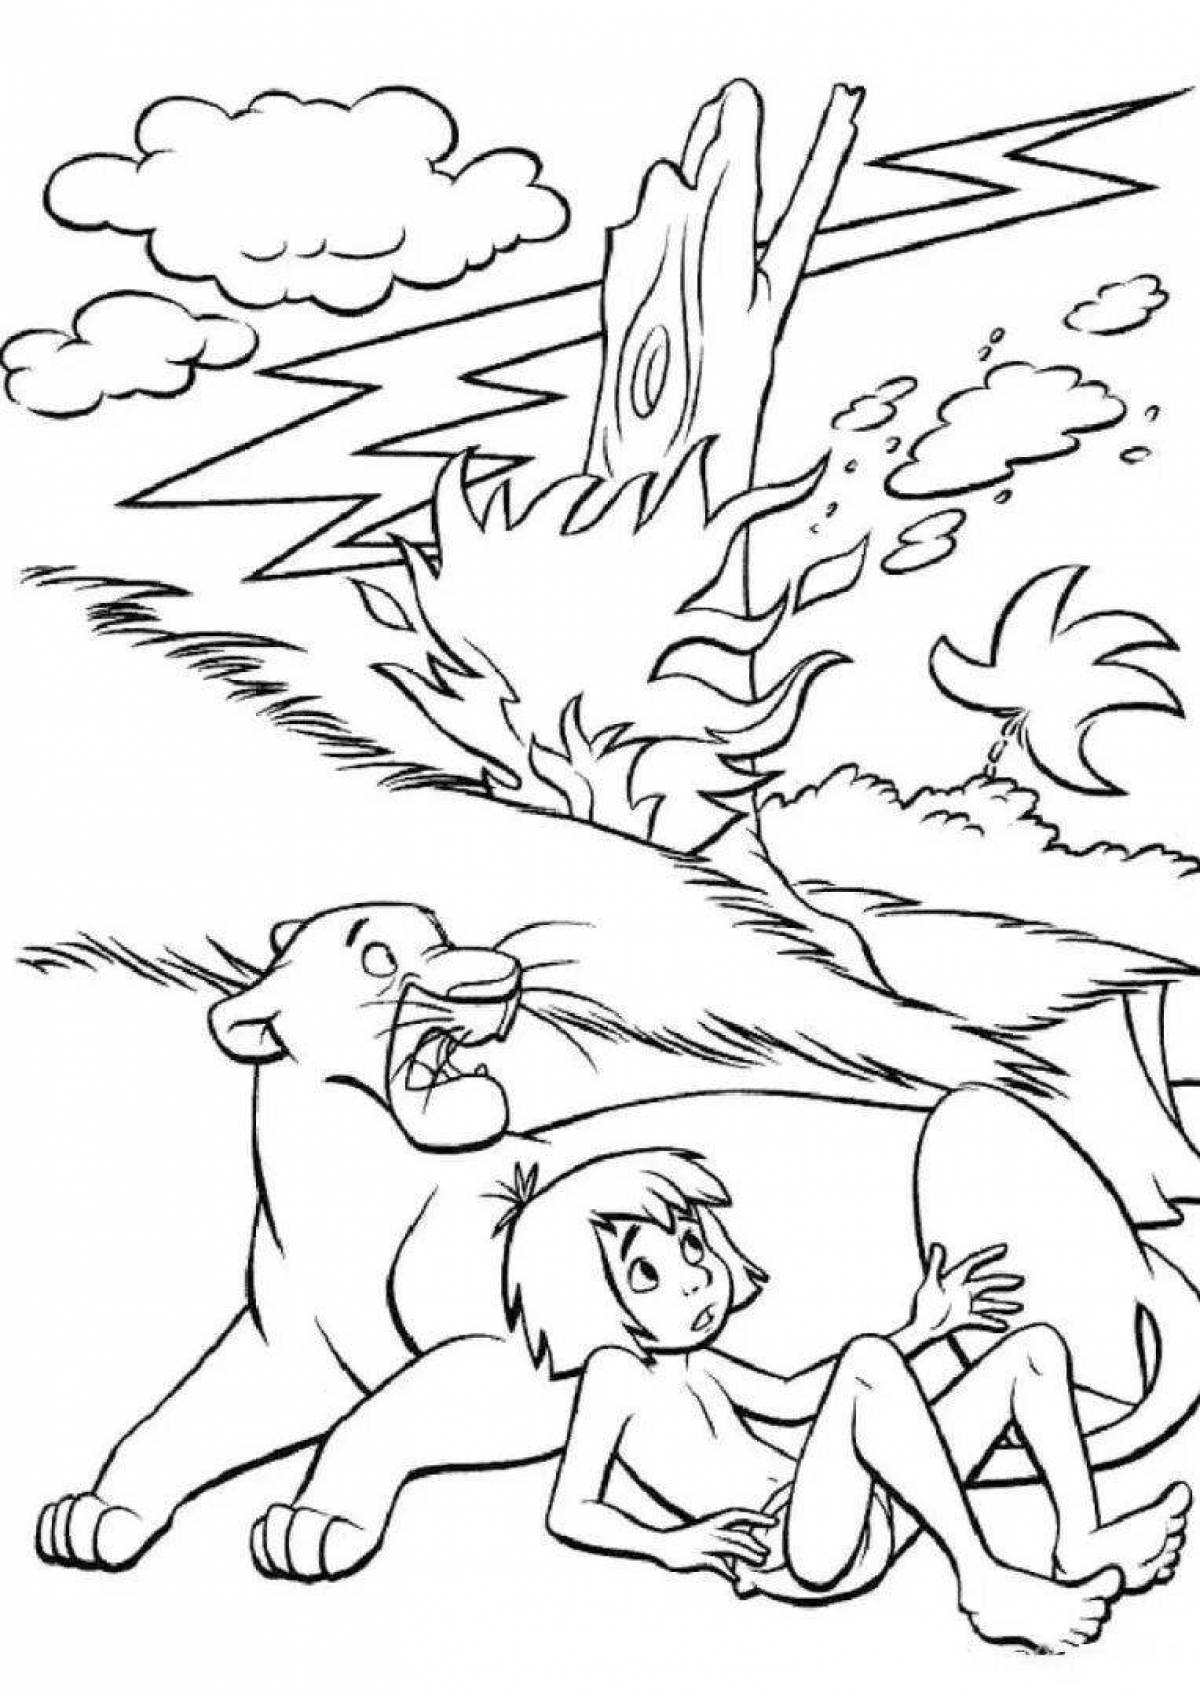 Mowgli and Bagheera coloring page